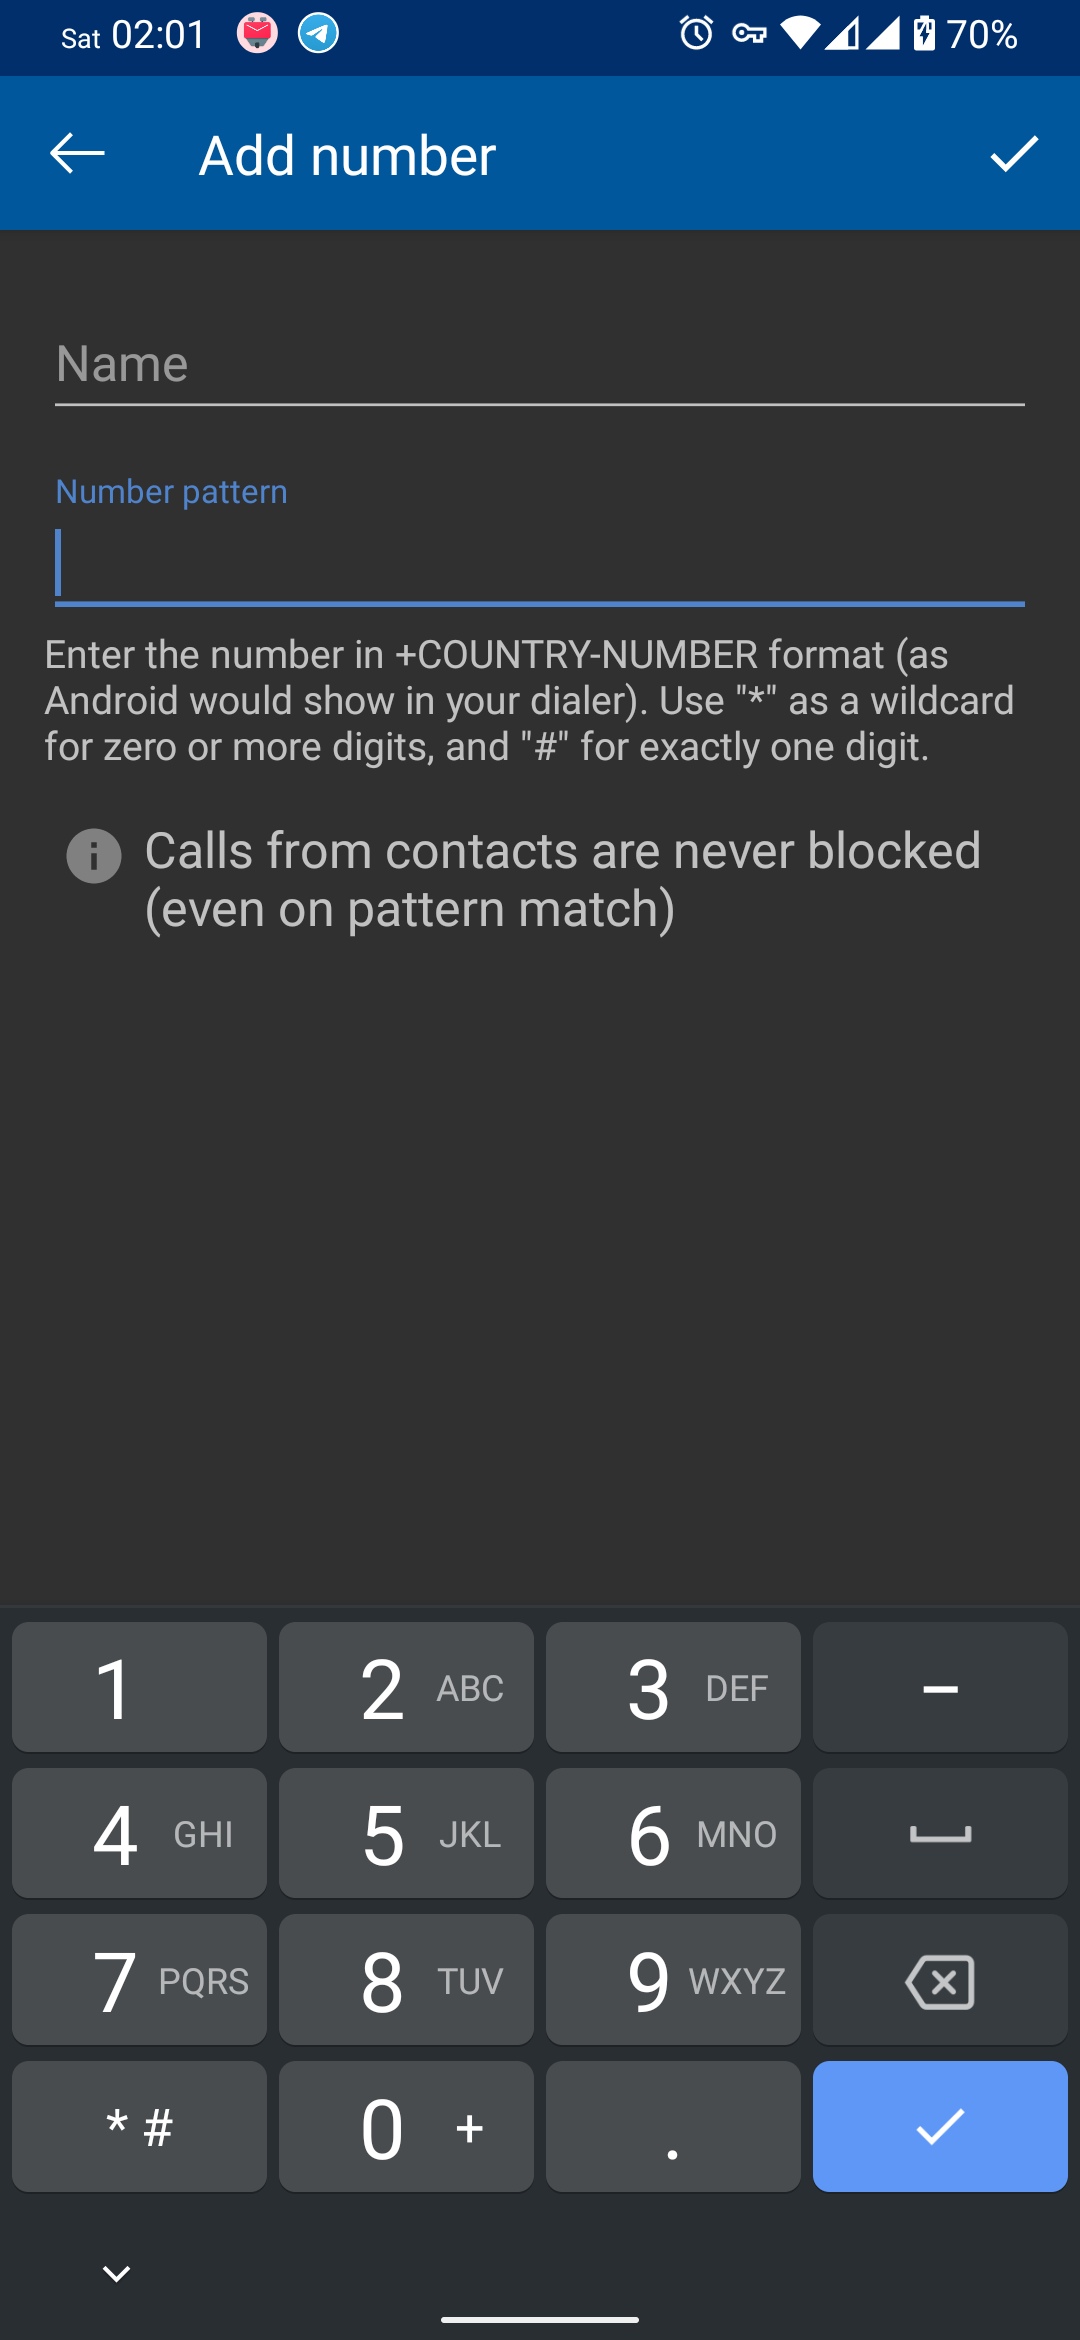 yacb-call-blocker-android-spam-filer-black-list-add-number